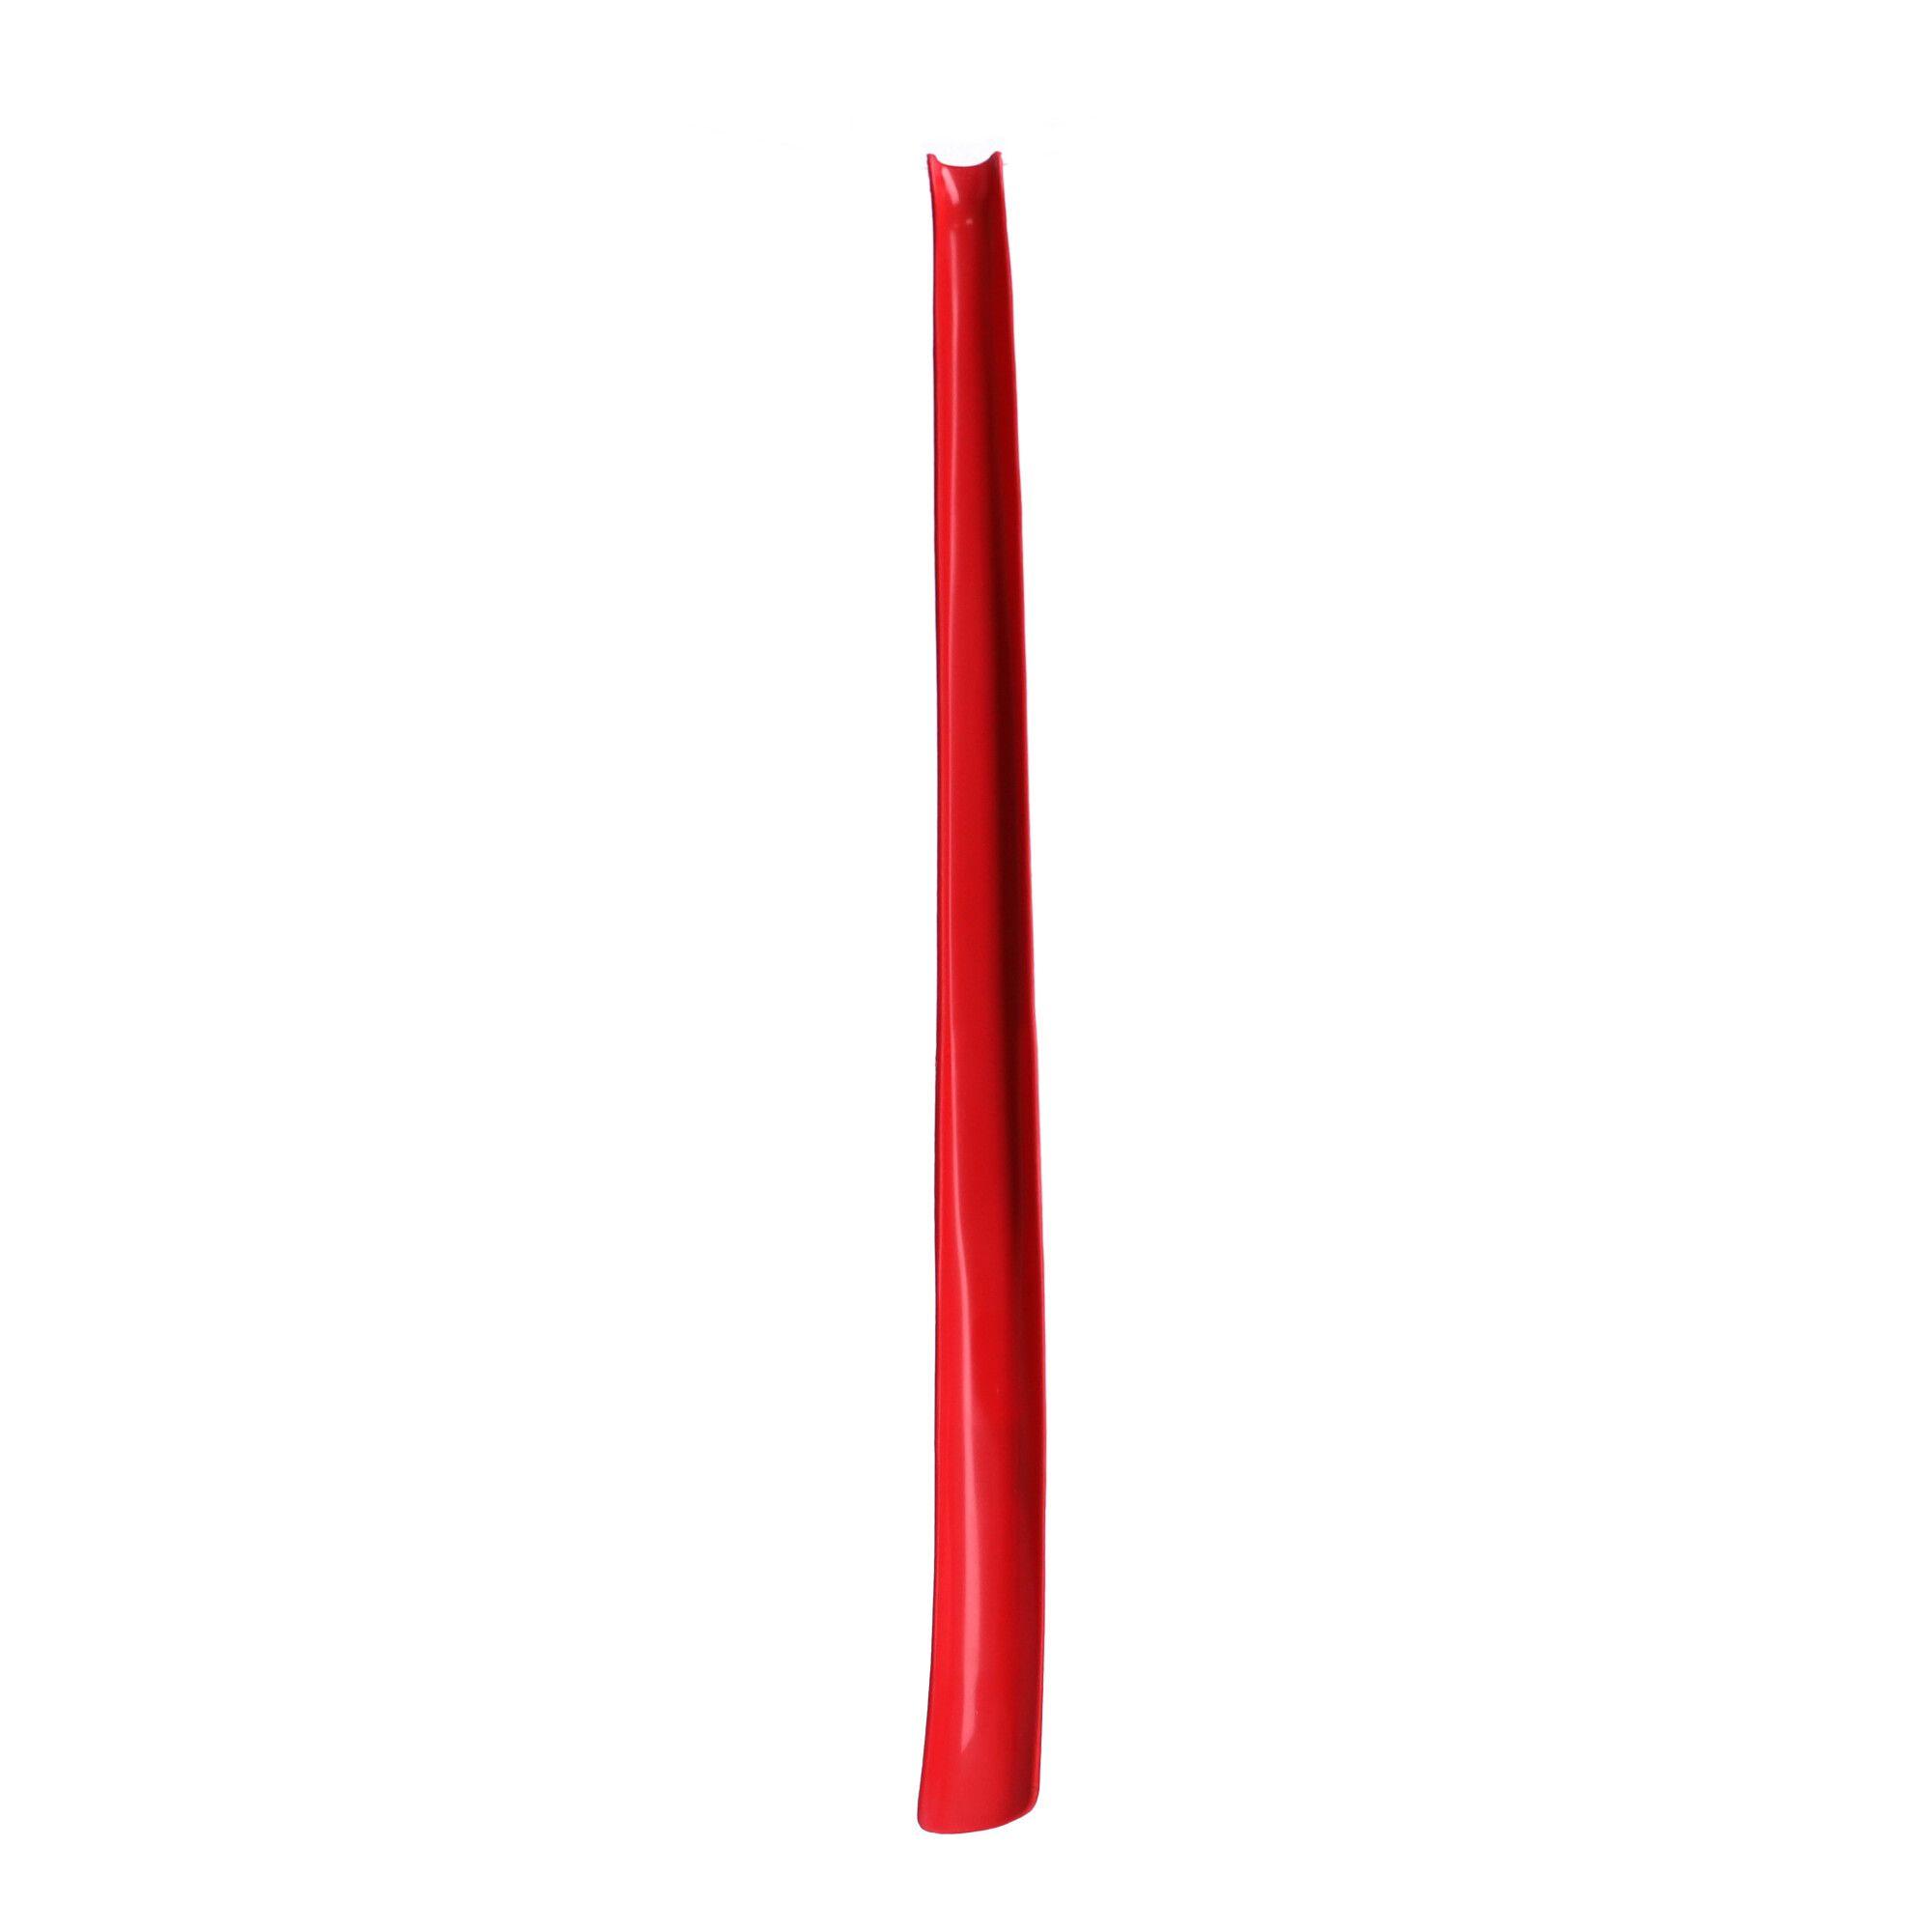 Shoehorn B001 long made of polypropylene - red